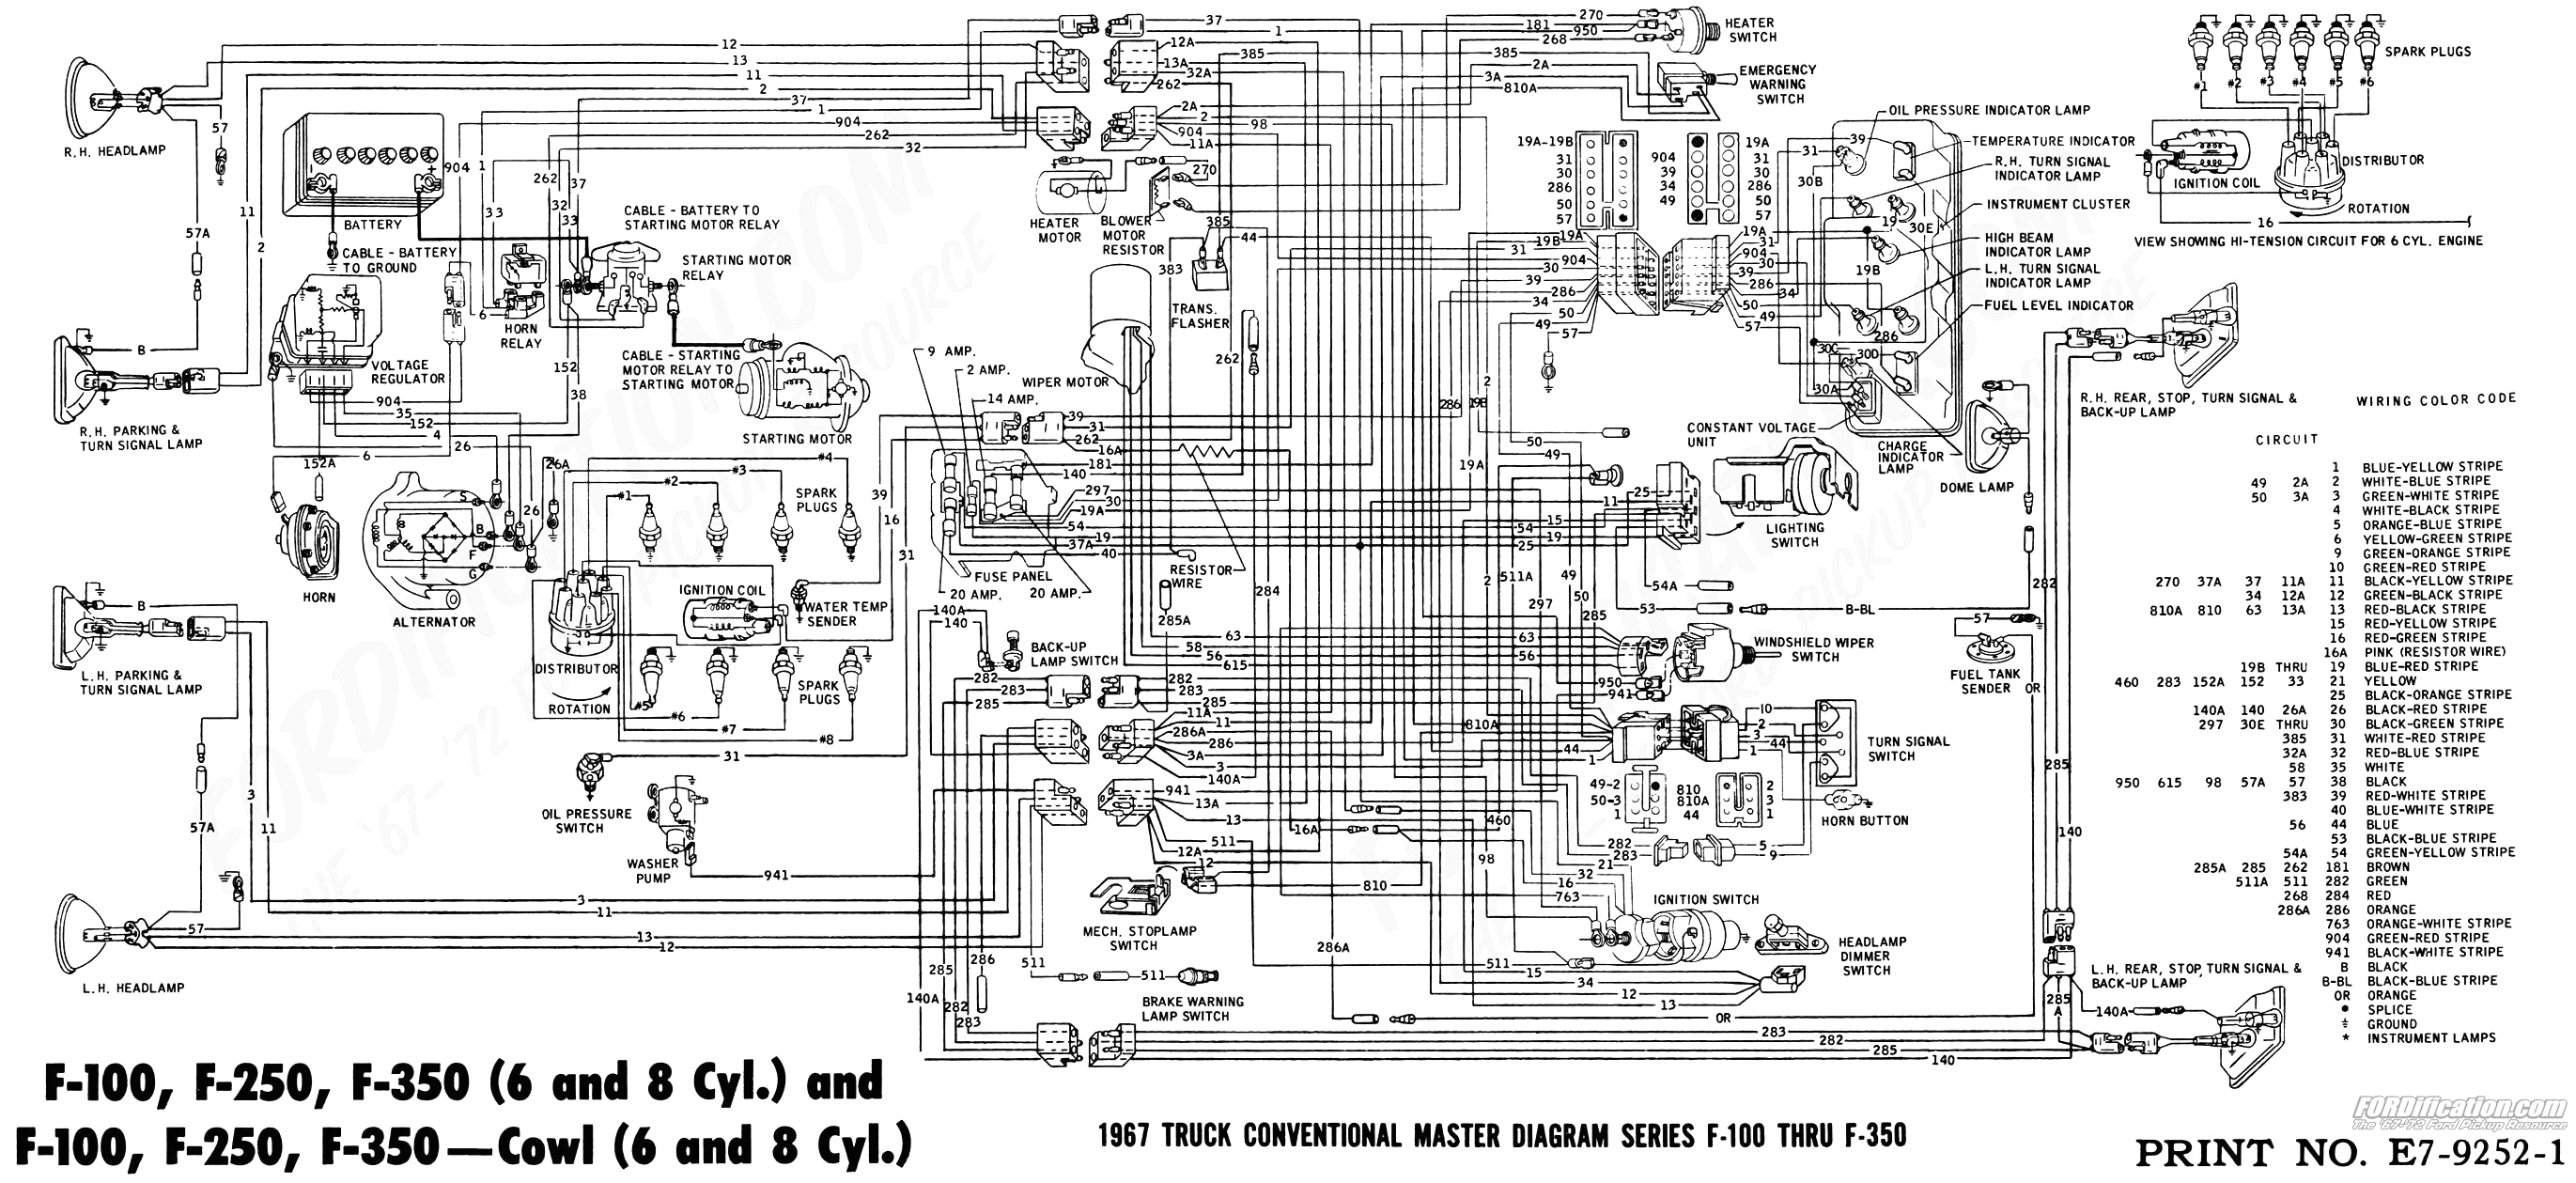 1989 ford f150 electrical diagram wiring diagram expert 1989 ford f150 tail light wiring diagram 1989 ford f150 wiring diagram